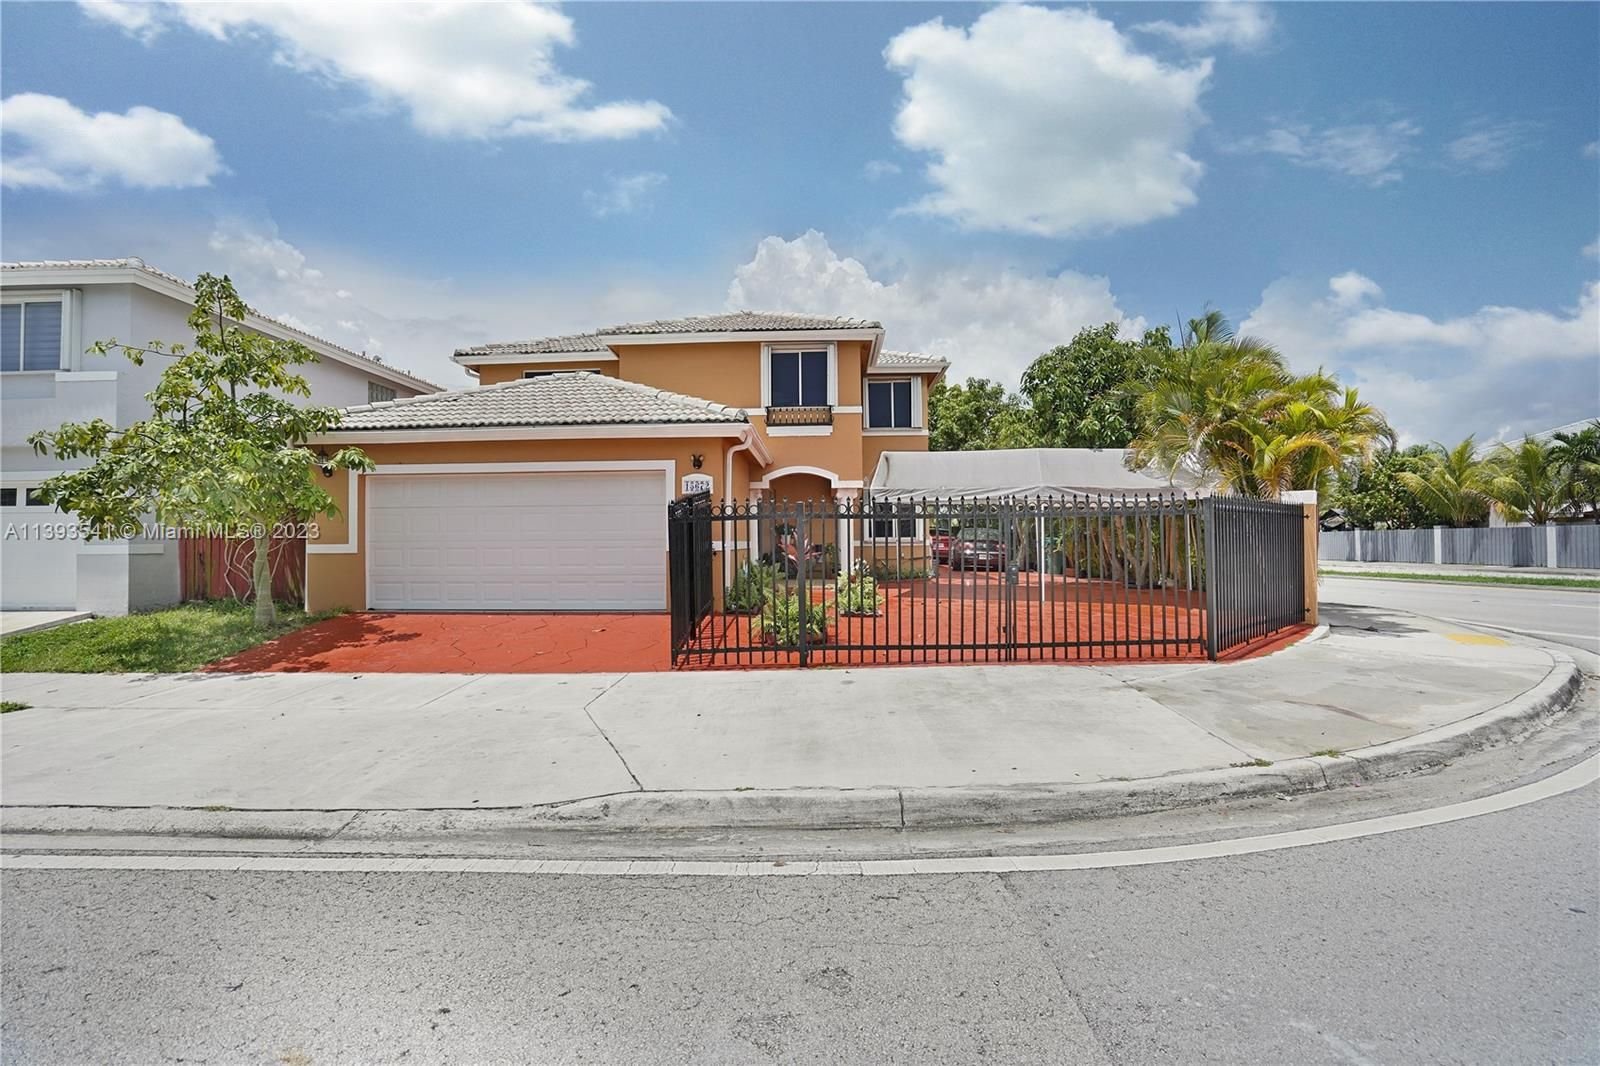 Real estate property located at 15672 91st Ln, Miami-Dade County, Miami, FL